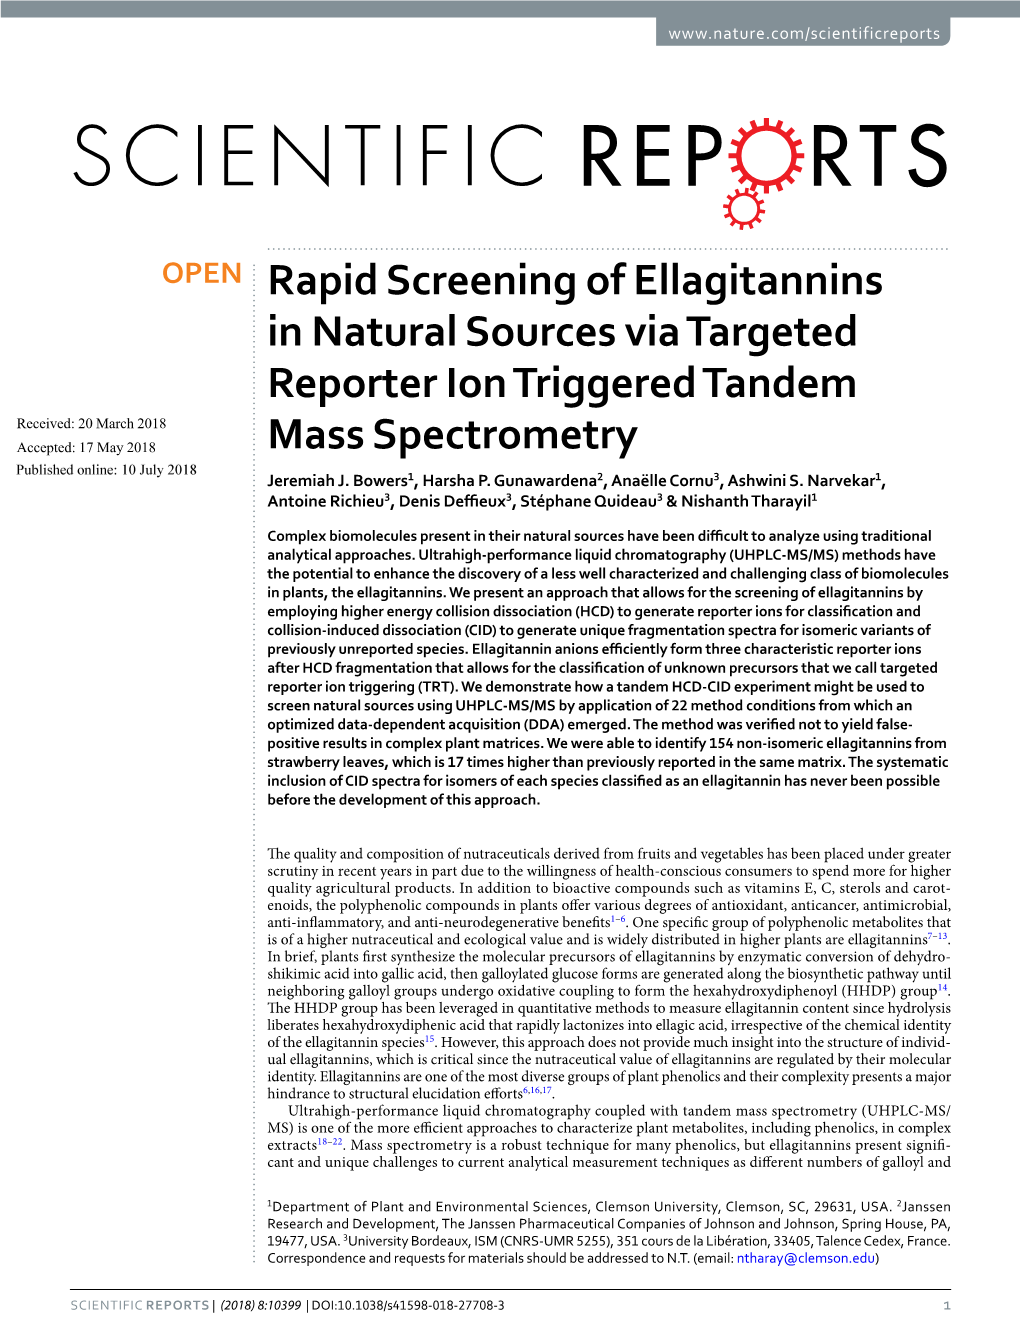 Rapid Screening of Ellagitannins in Natural Sources Via Targeted